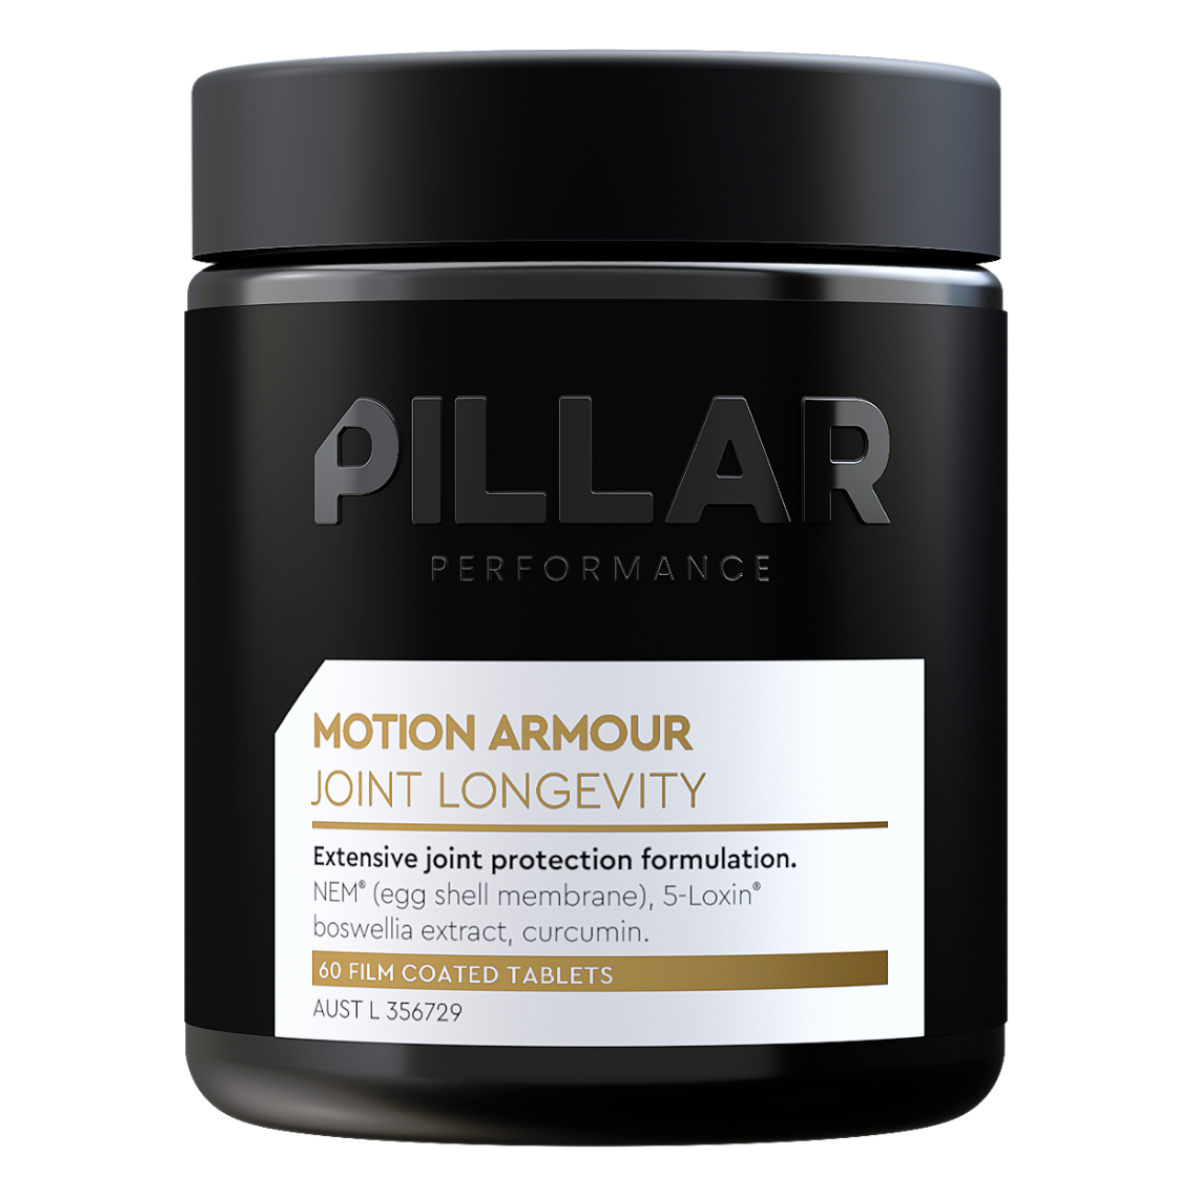 Pillar Performance motion armour joint longevity